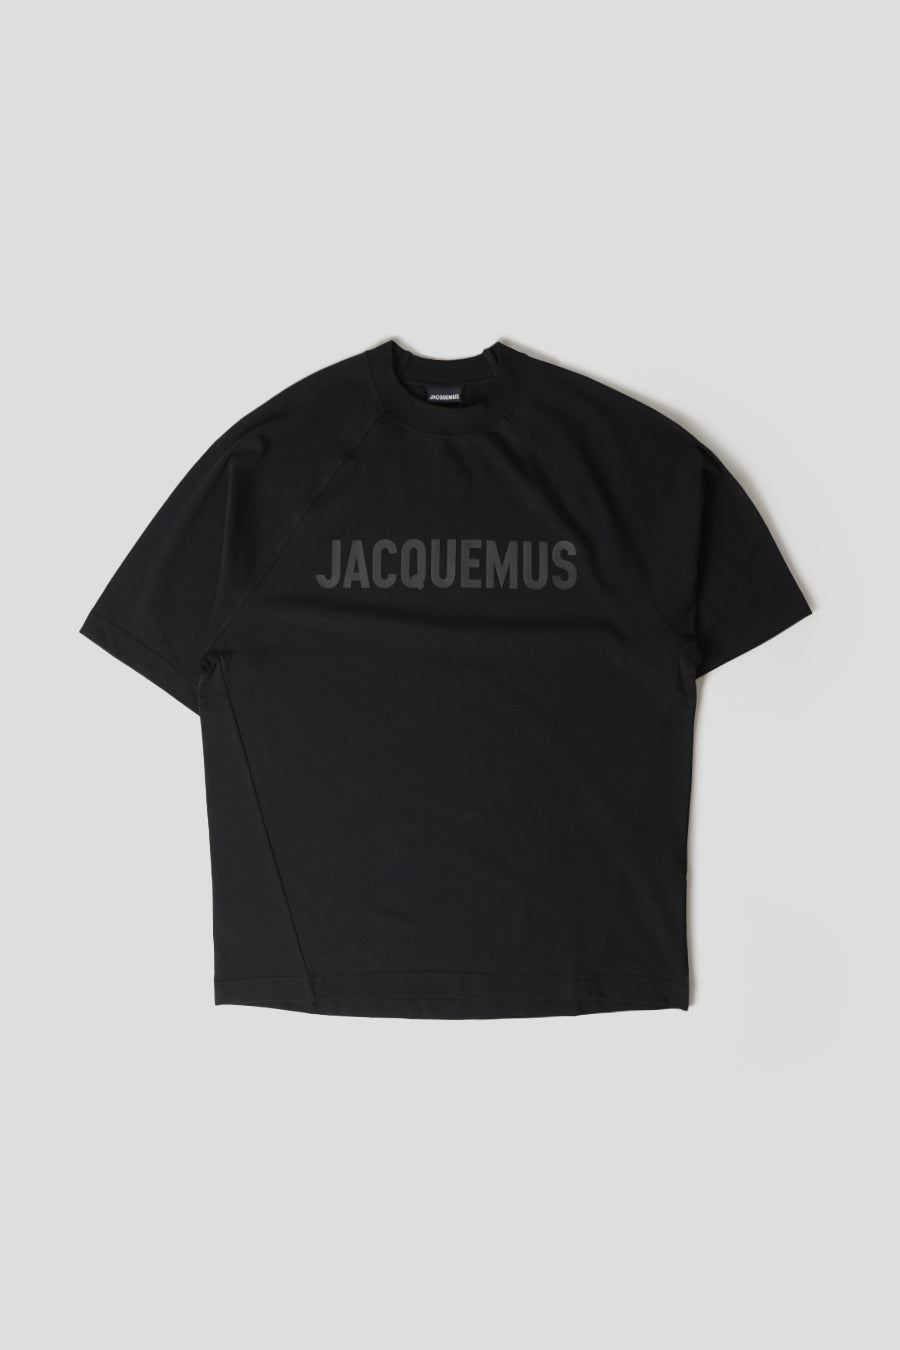 Jacquemus - BLACK TYPO T-SHIRT - LE LABO STORE